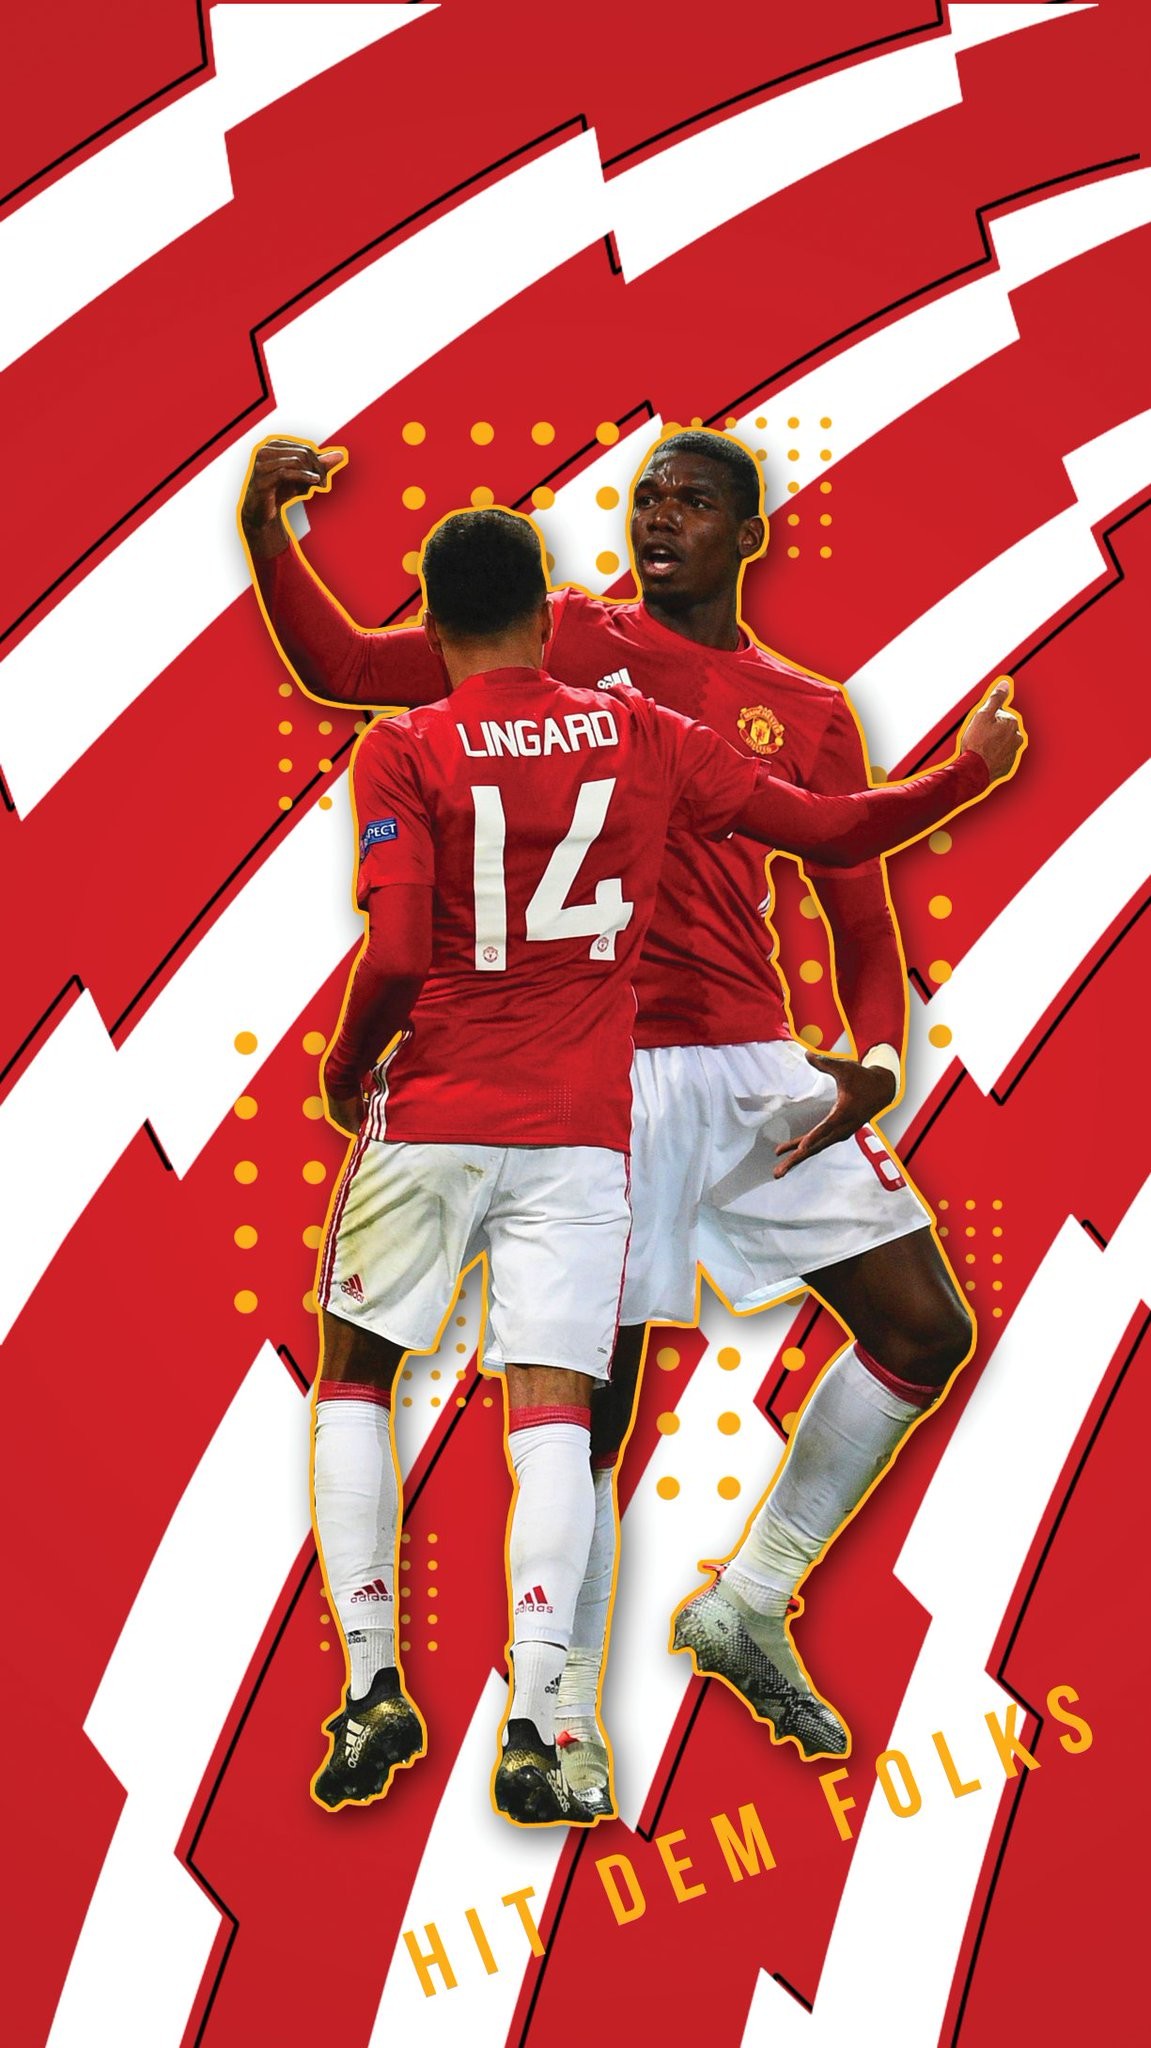 Footy Wallpapers on Twitter Jesse Lingard Paul Pogba Hit Dem Folks iPhone wallpaper. RTs much appreciated #MUFC XLDry5EBaY